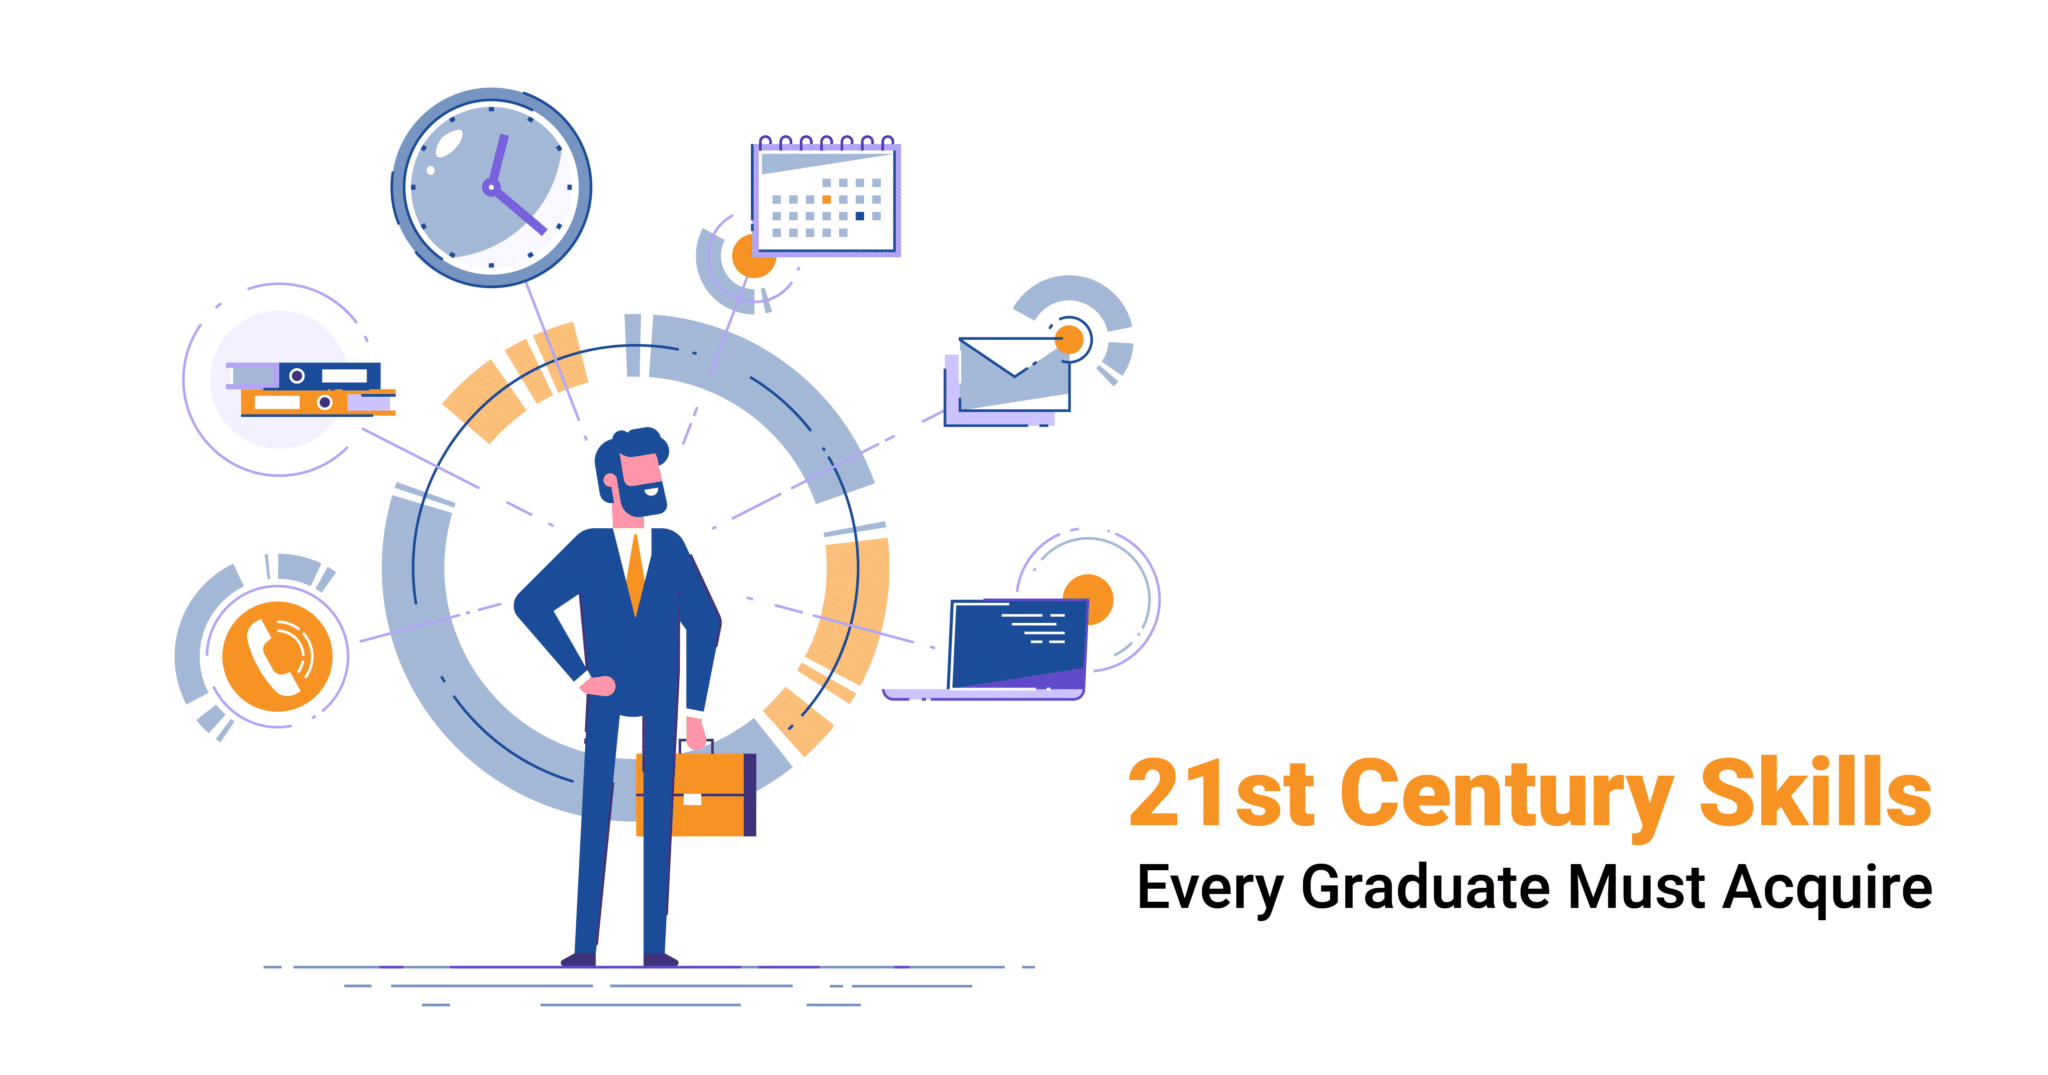 21st Century Skills every graduate must acquire